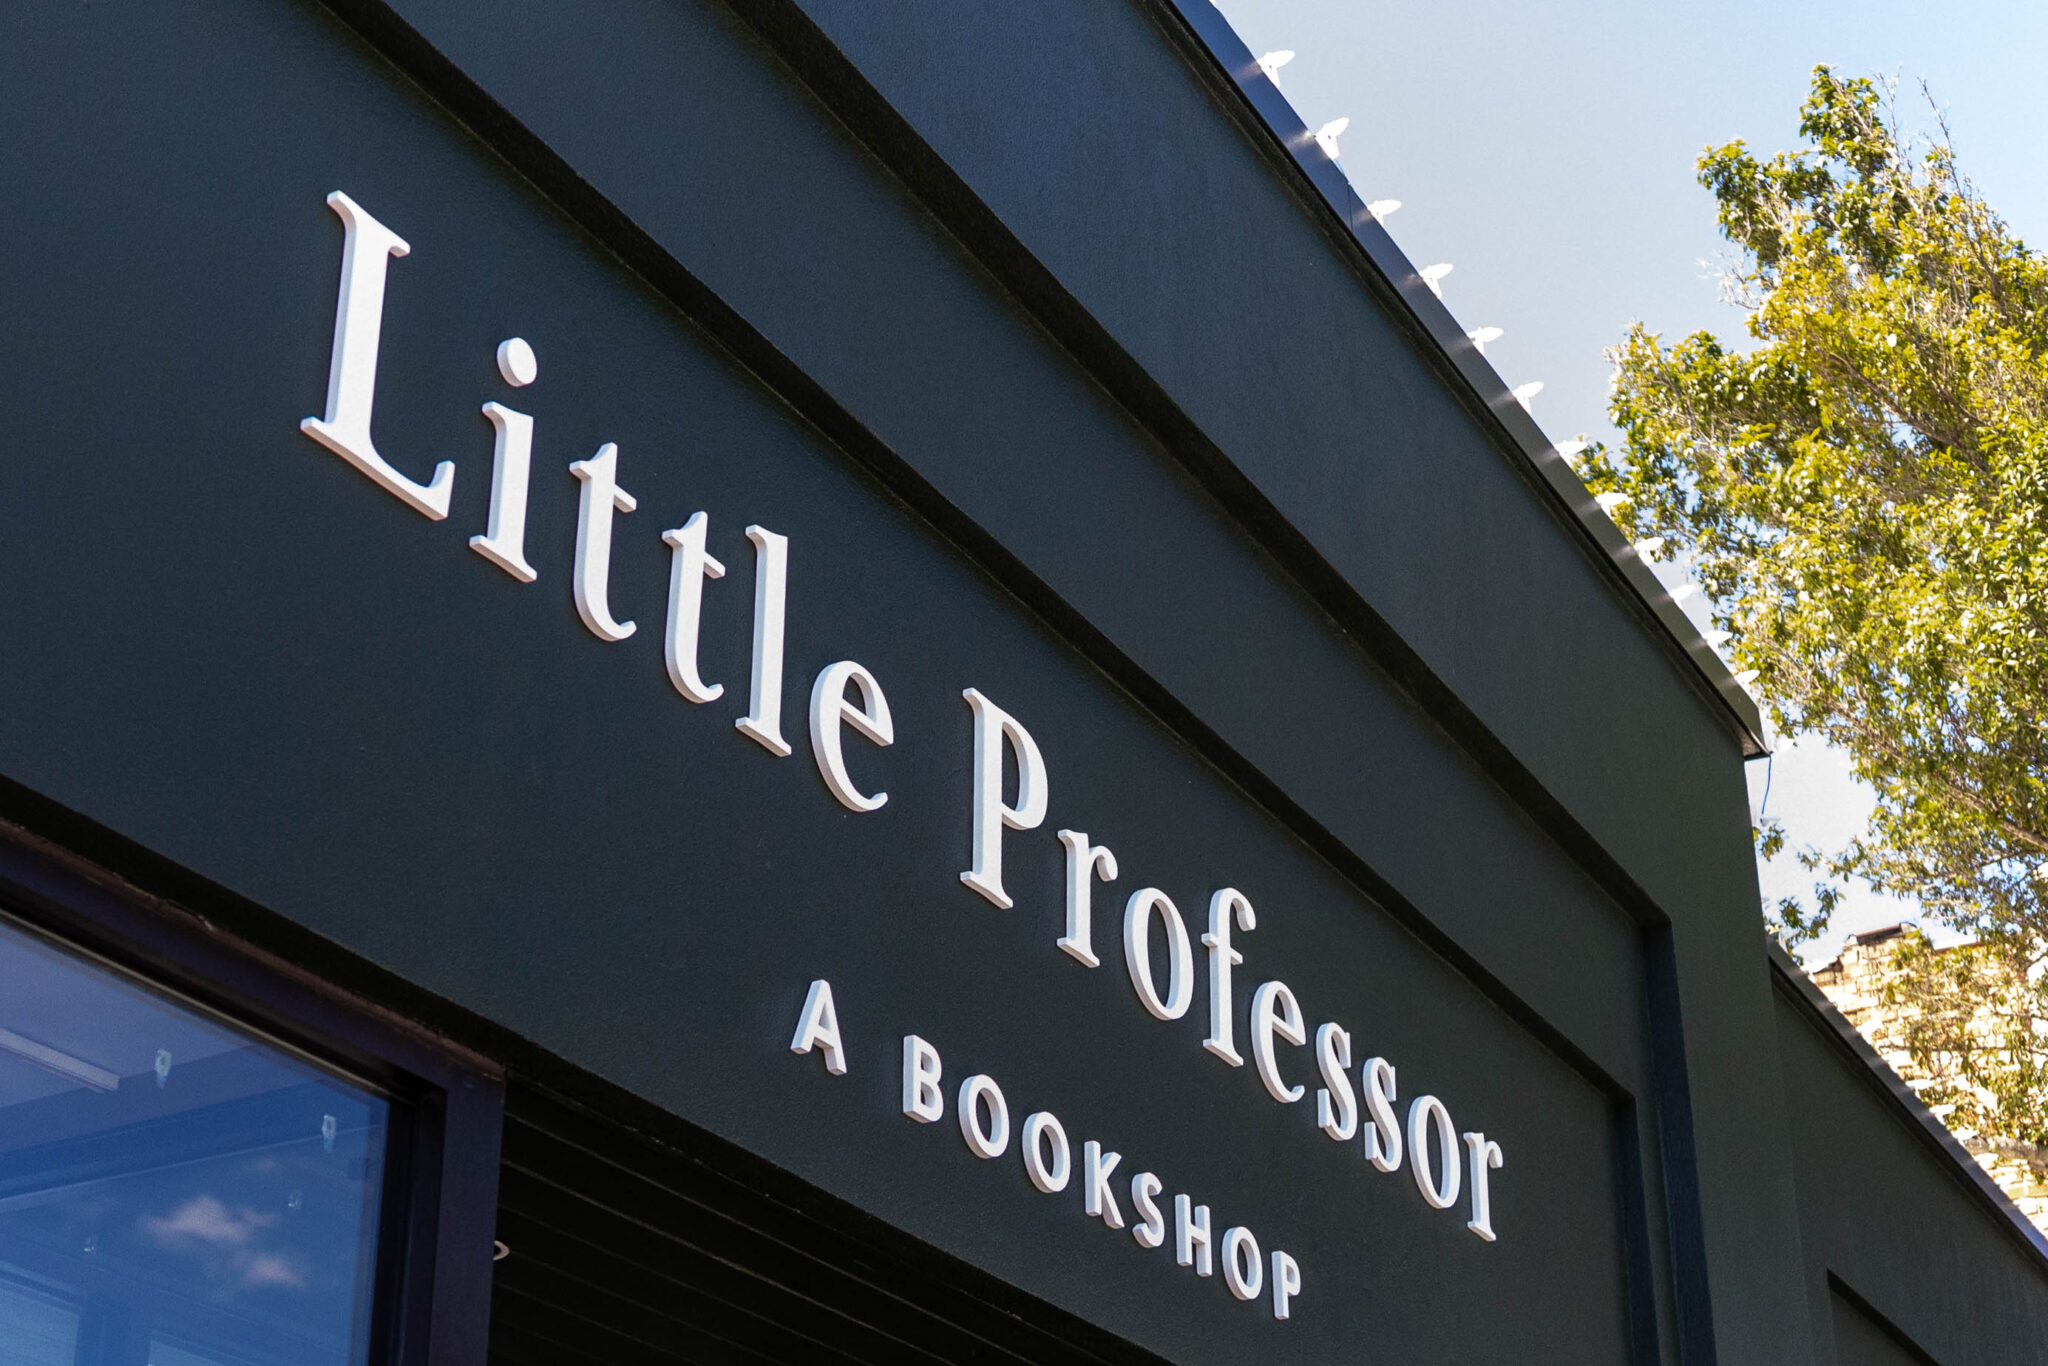 Little Professor